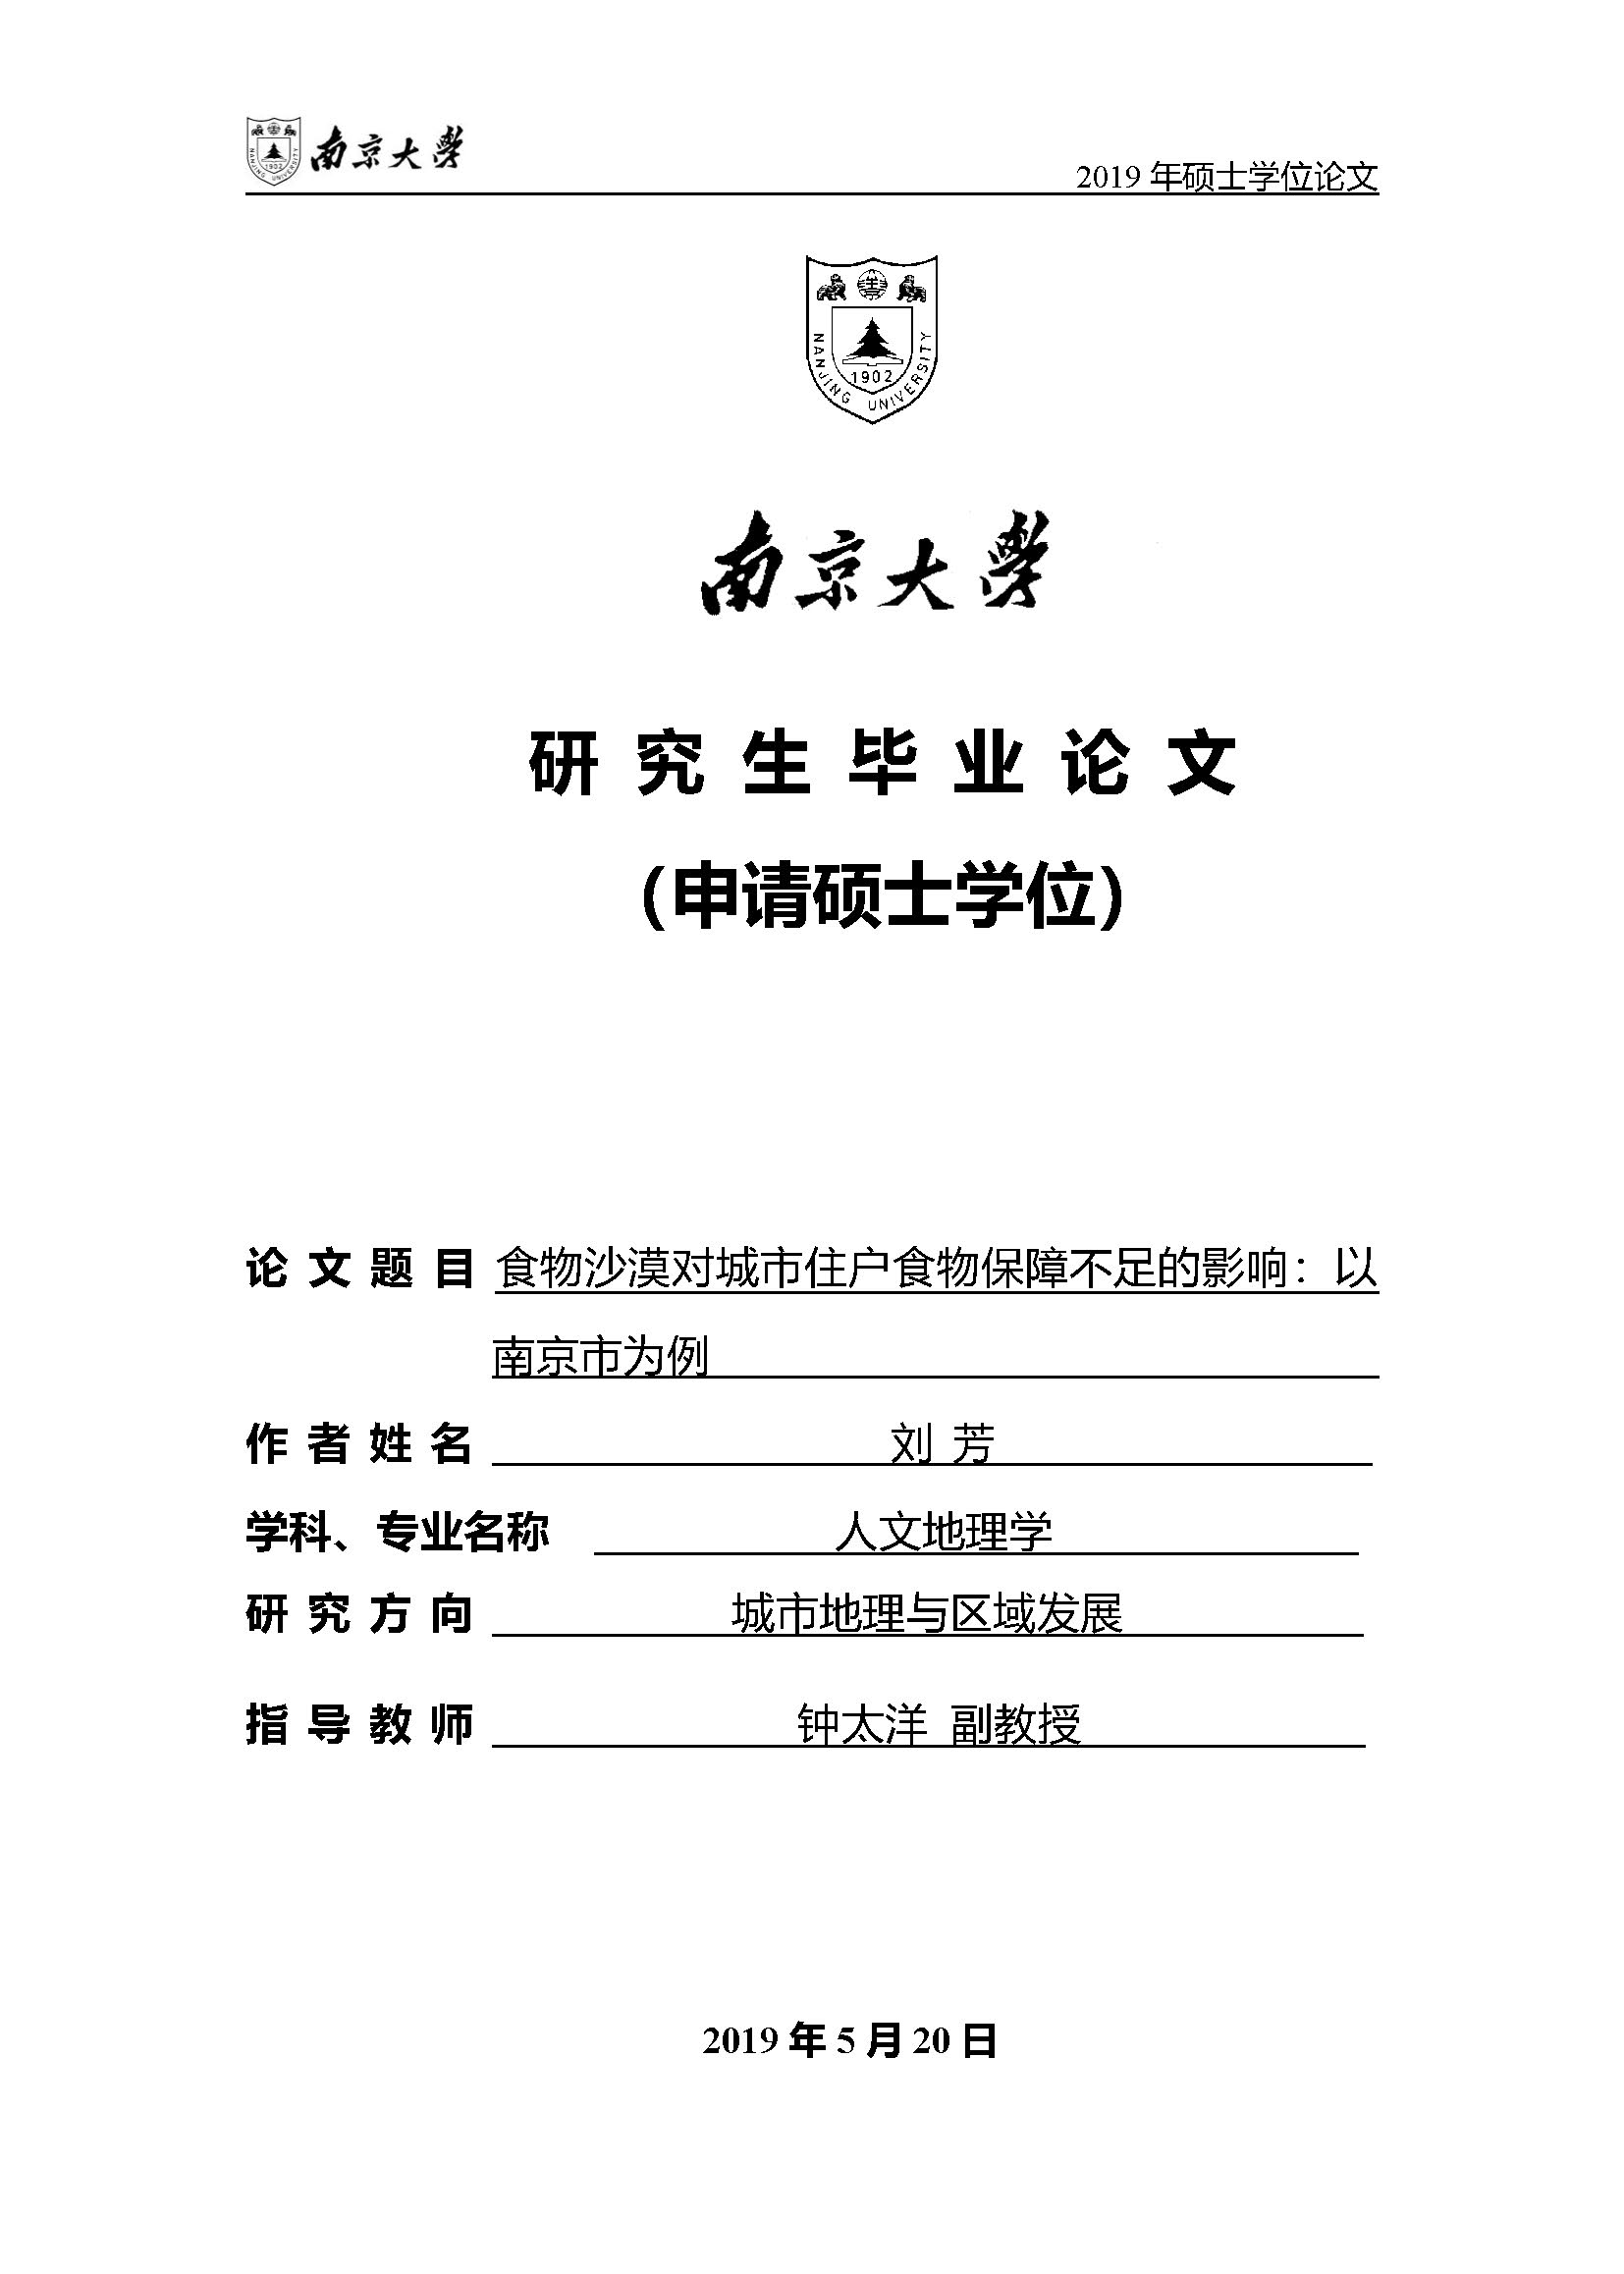 Fang-Liu-thesis-2019 Cover